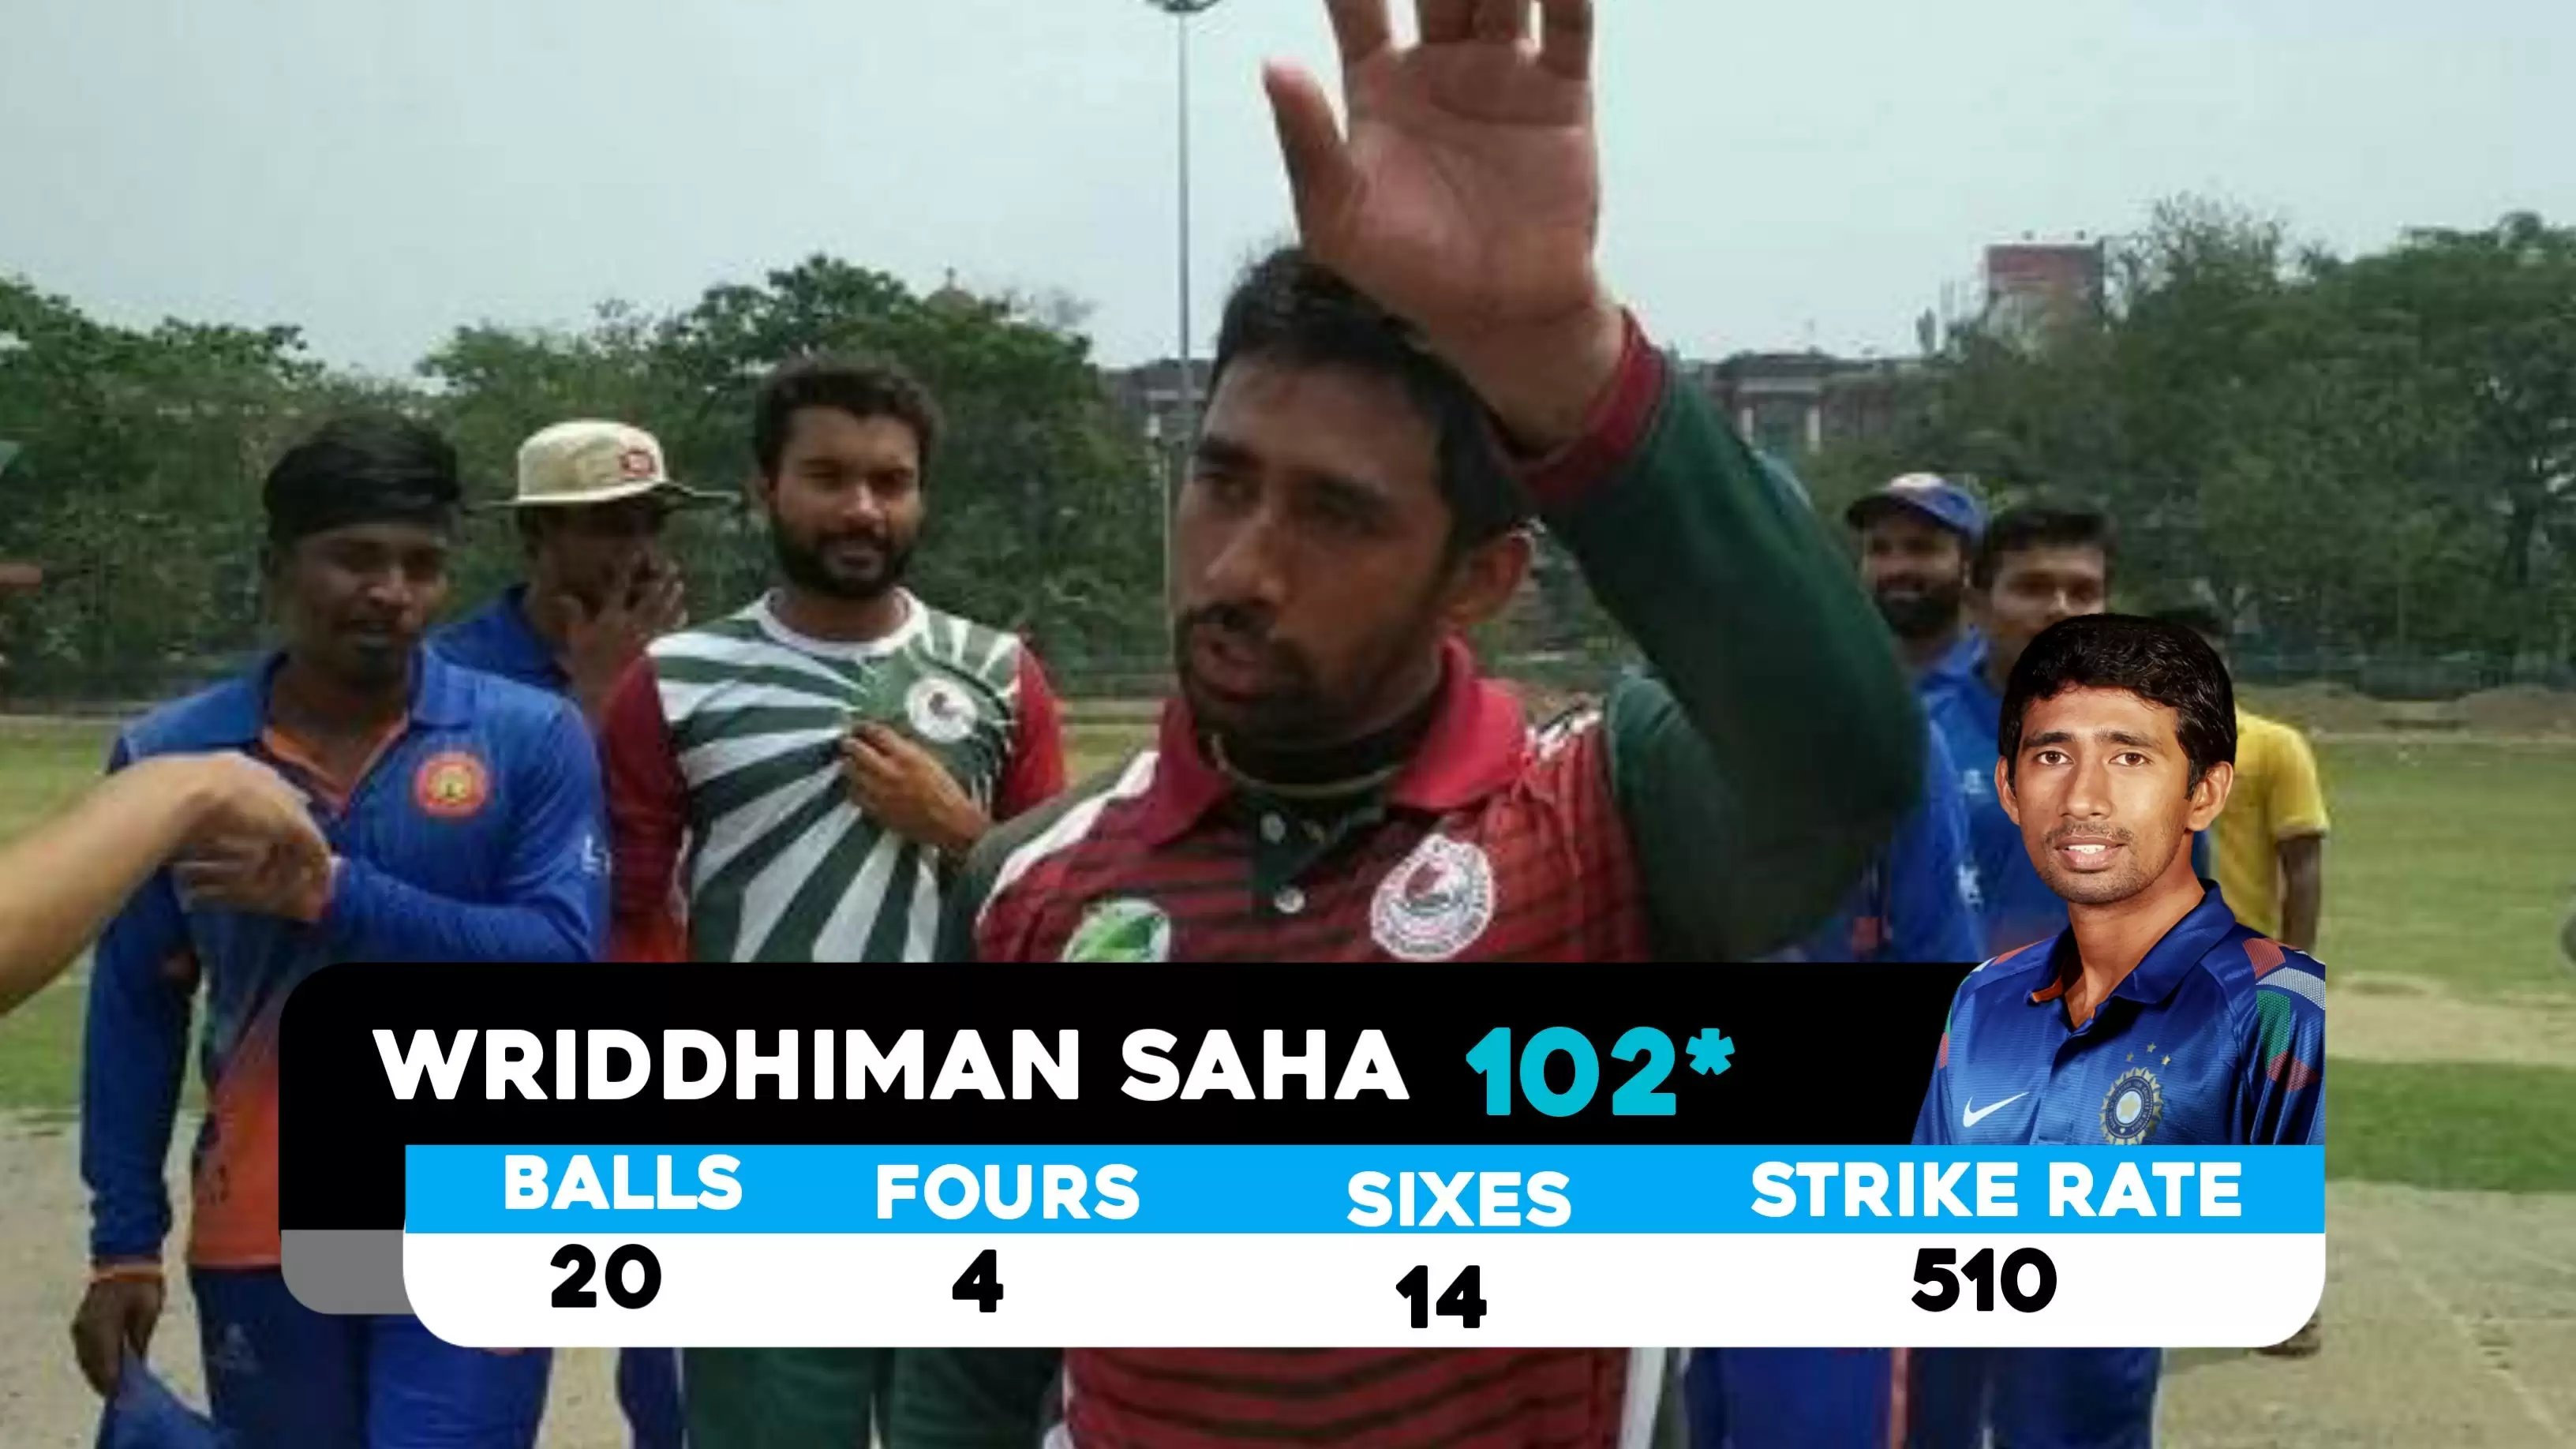 Wriddhiman Saha's fastest century